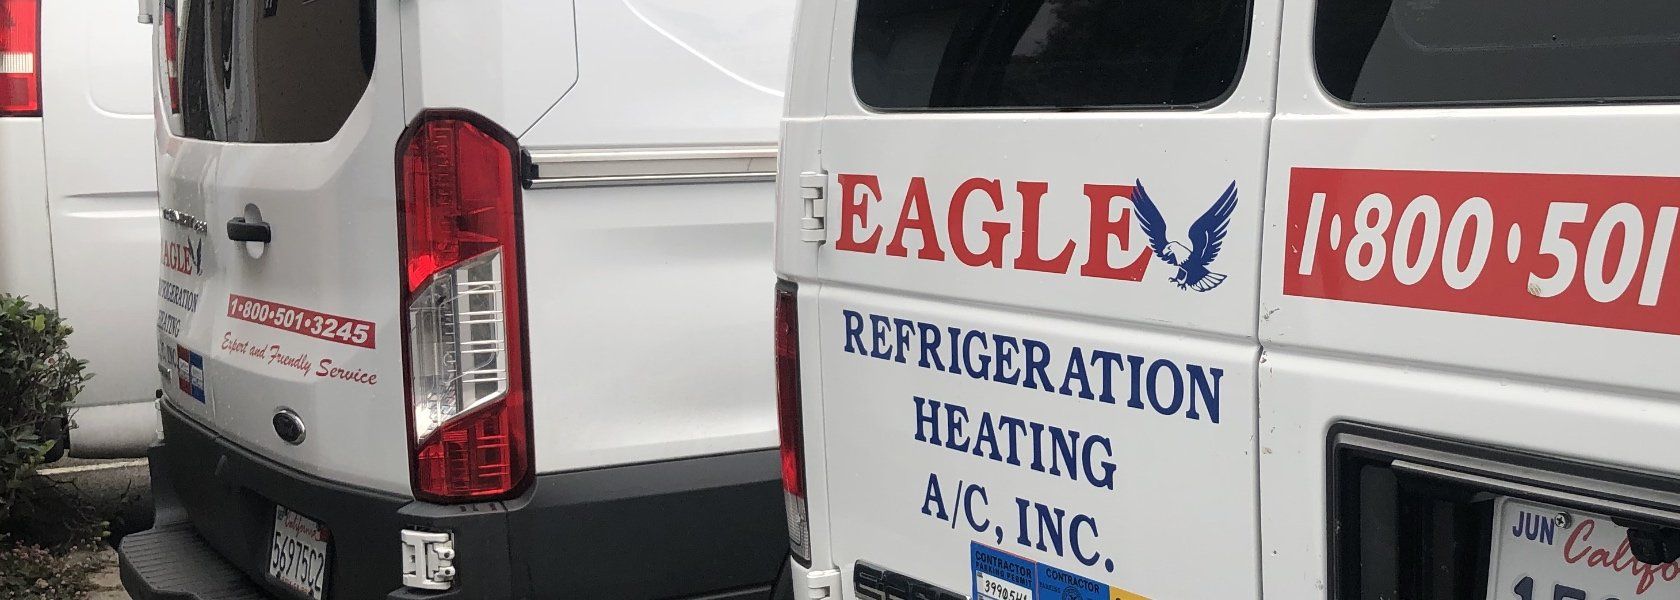 Eagle Refrigeration Heating & A/C Inc